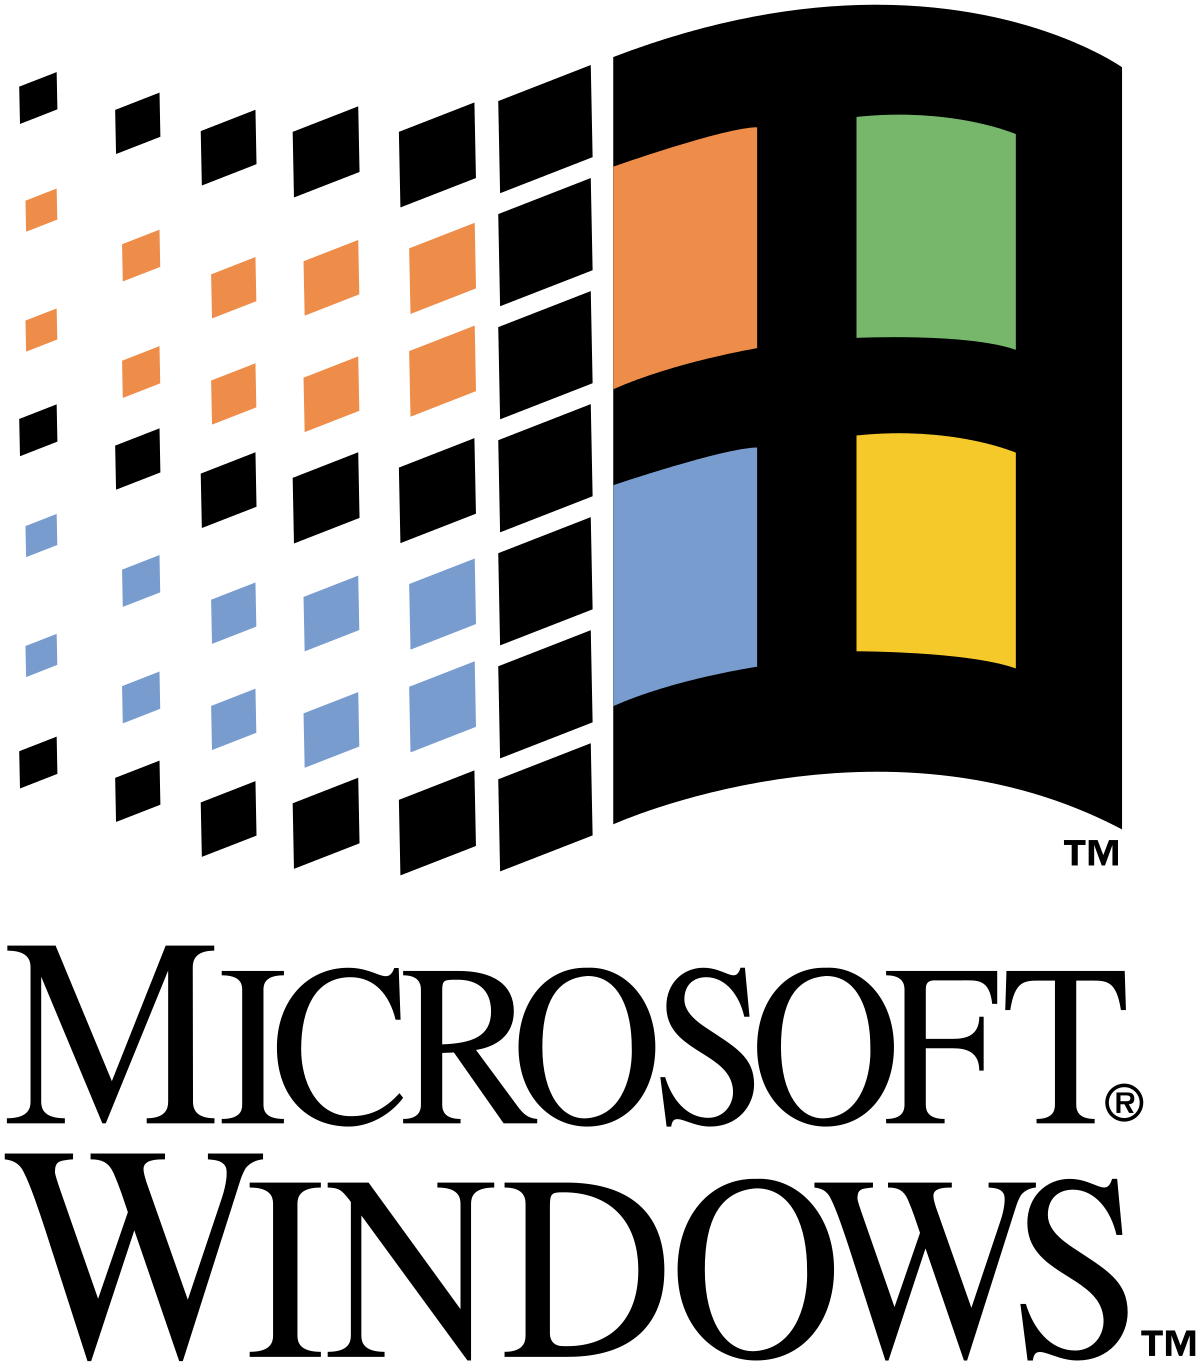 Windows 3.11 Logo - Microsoft Windows 3.1 – Wikipedia